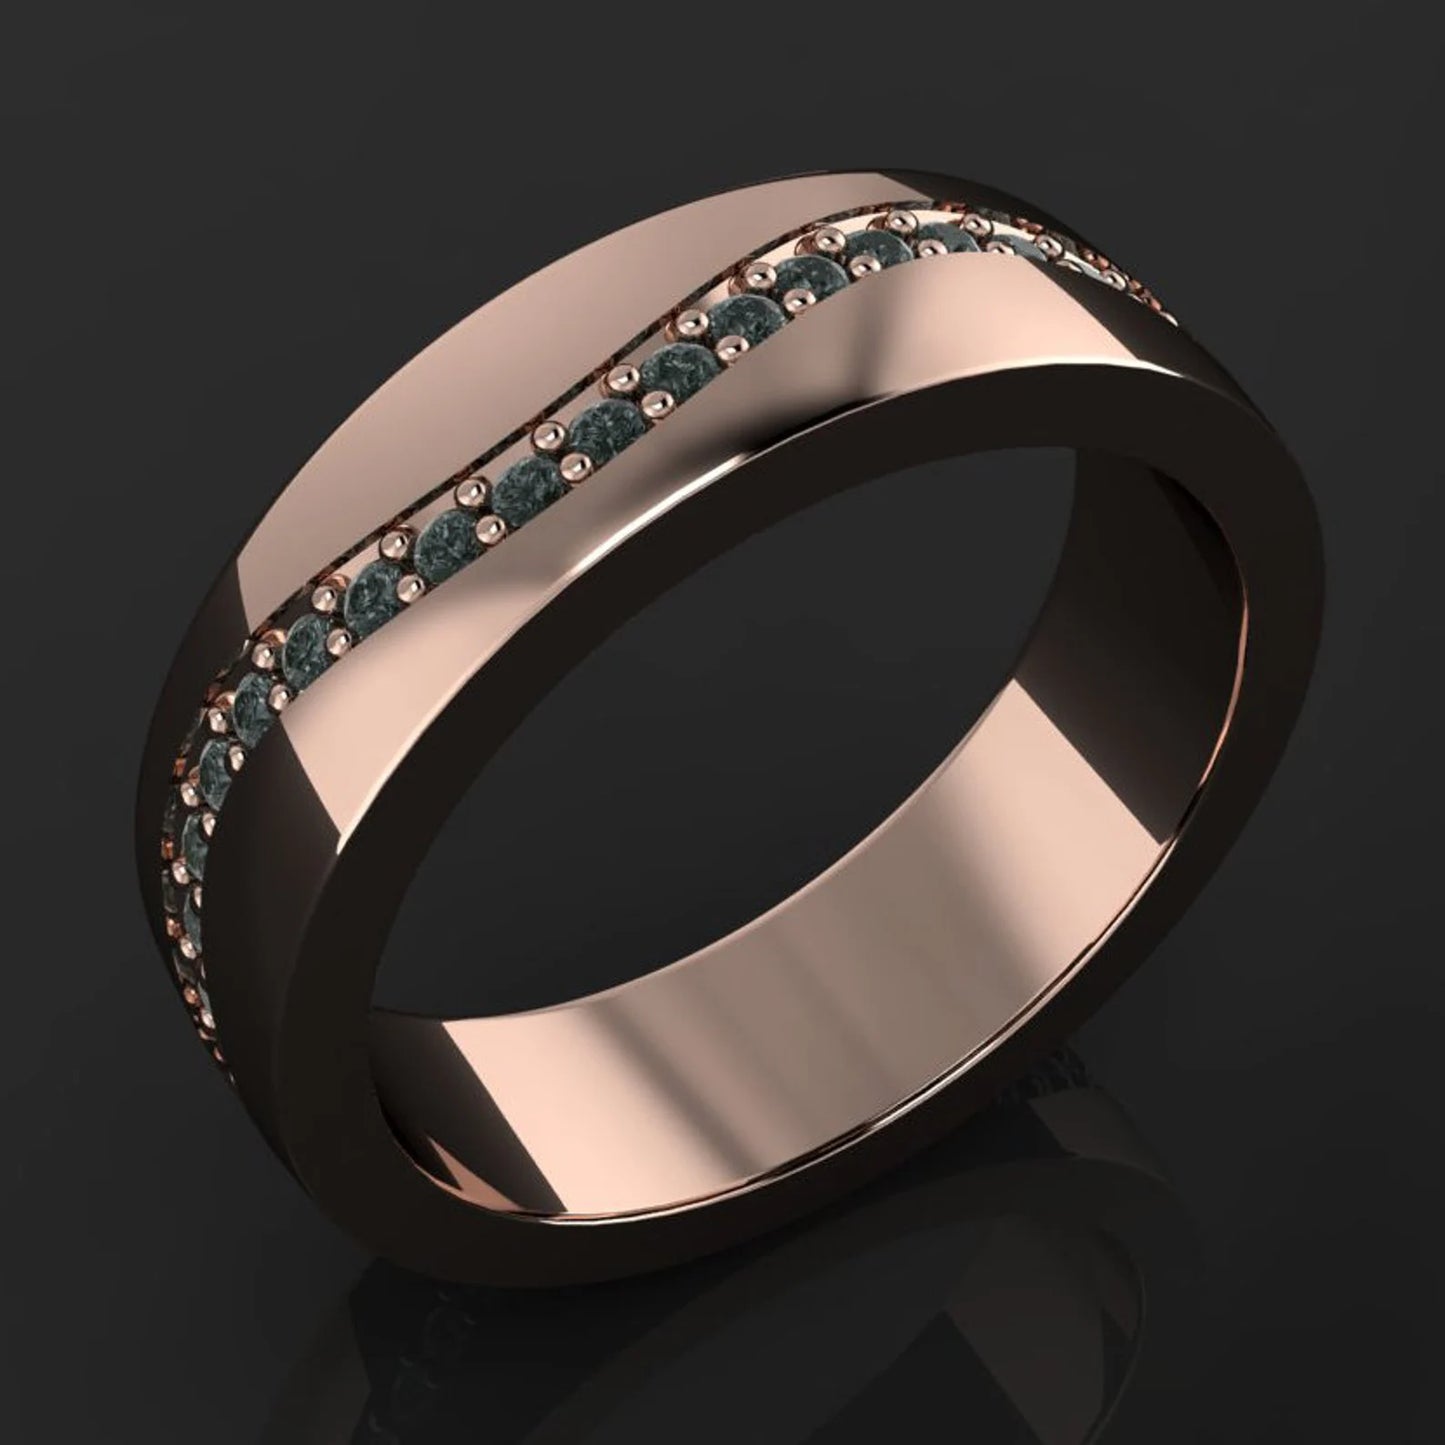 cayton ring - men's gold and black diamond wedding band, black diamond ring - J Hollywood Designs